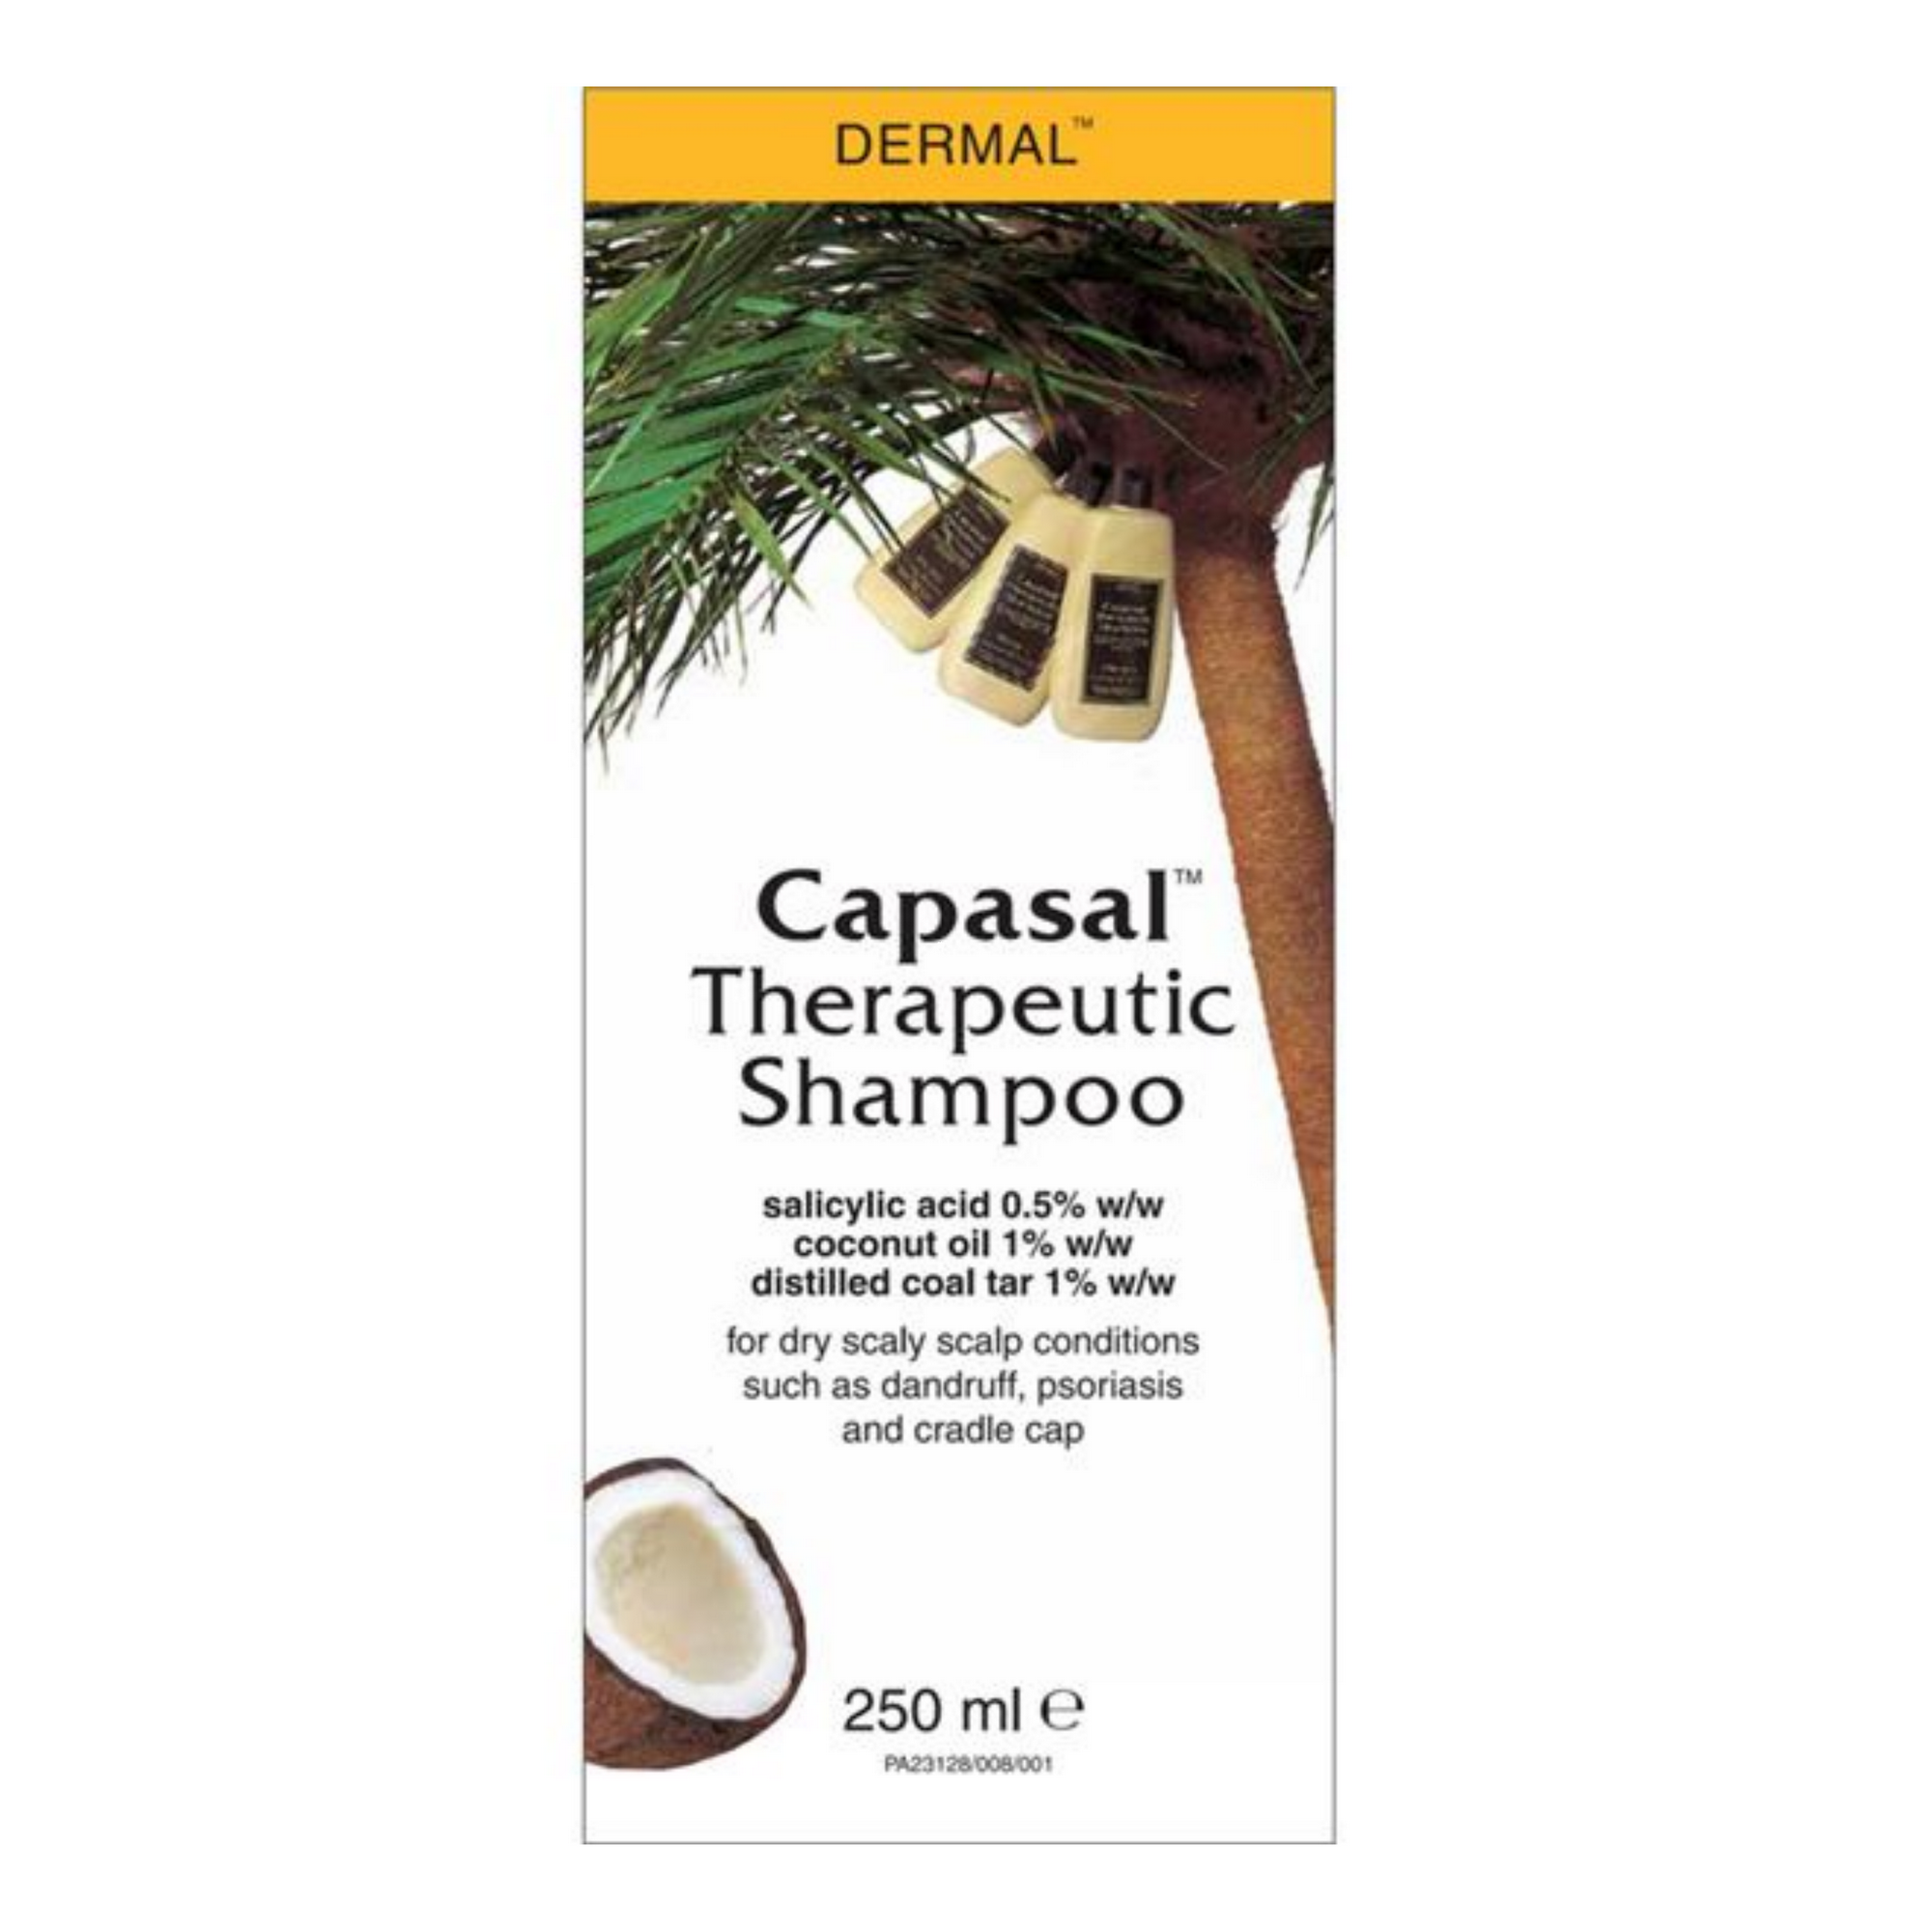 Capasal Therapeutic Shampoo-250ml